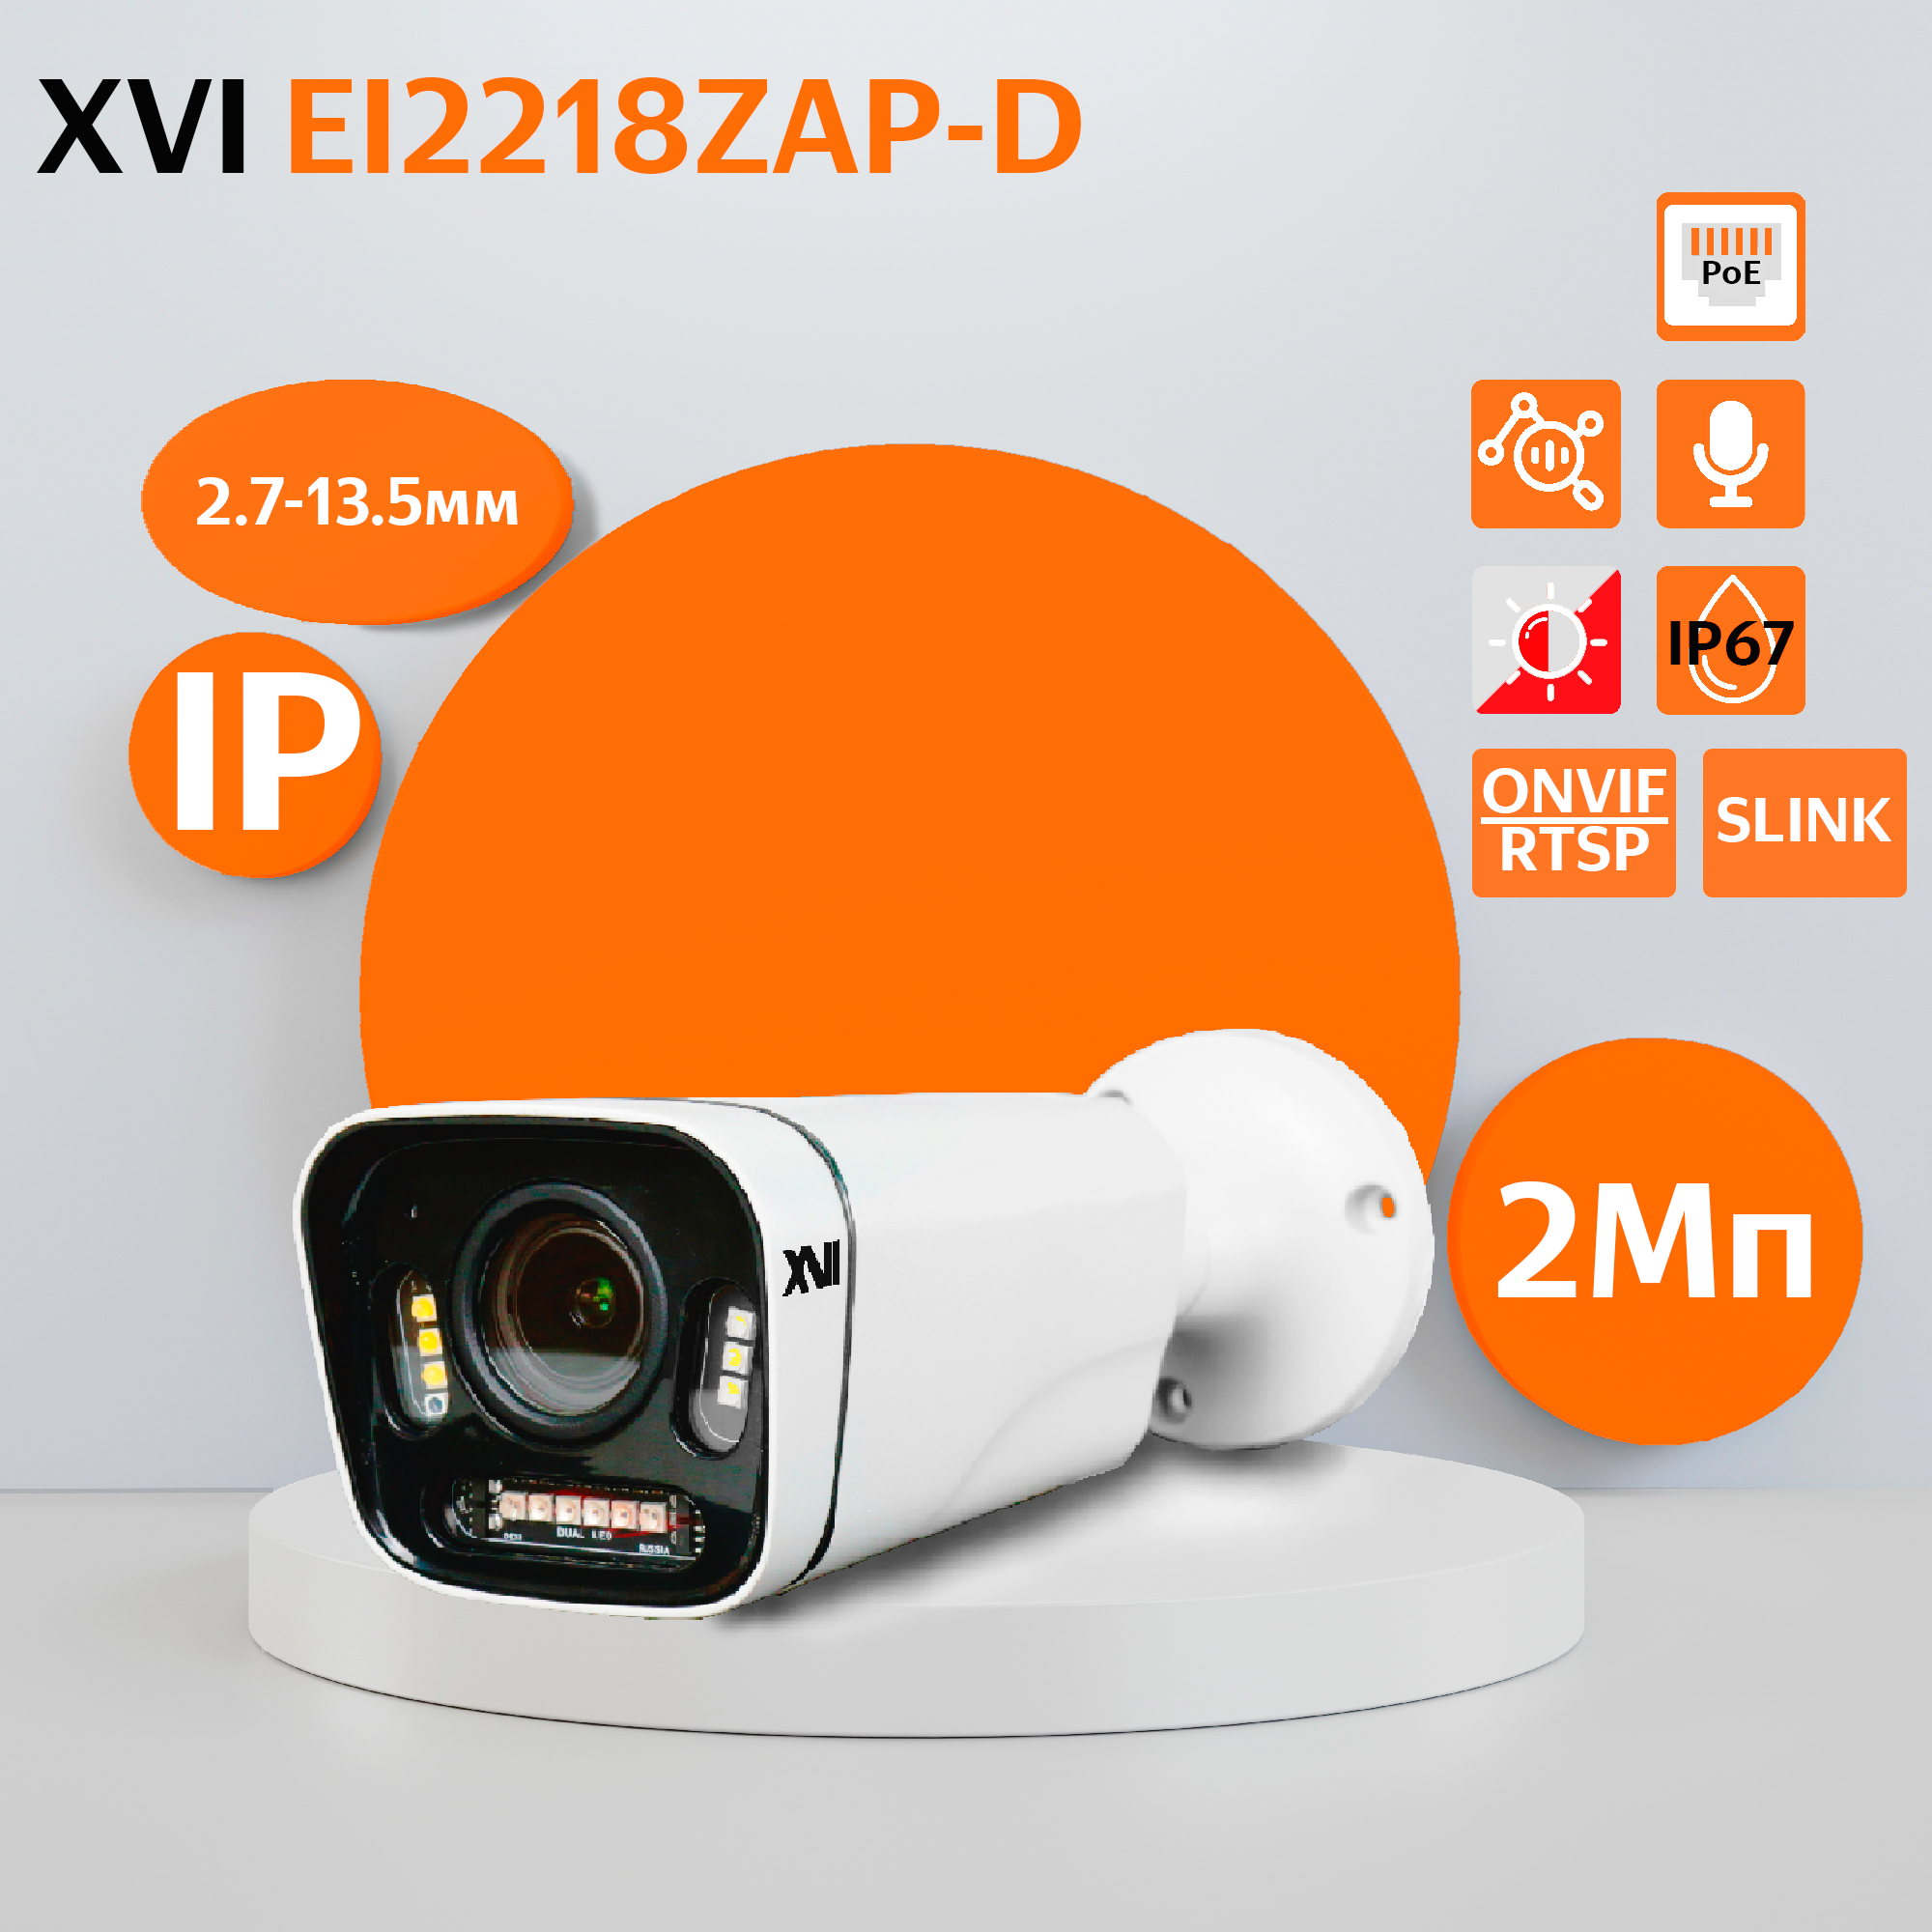 Уличная IP камера XVI EI2218ZAP-D, 2Мп, вариоф.объектив, PoE, ИК+белая, f=2.7-13.5мм уличная ip камера xvi ei5318zap d 5мп вариоф объектив poe ик белая f 2 7 13 5мм